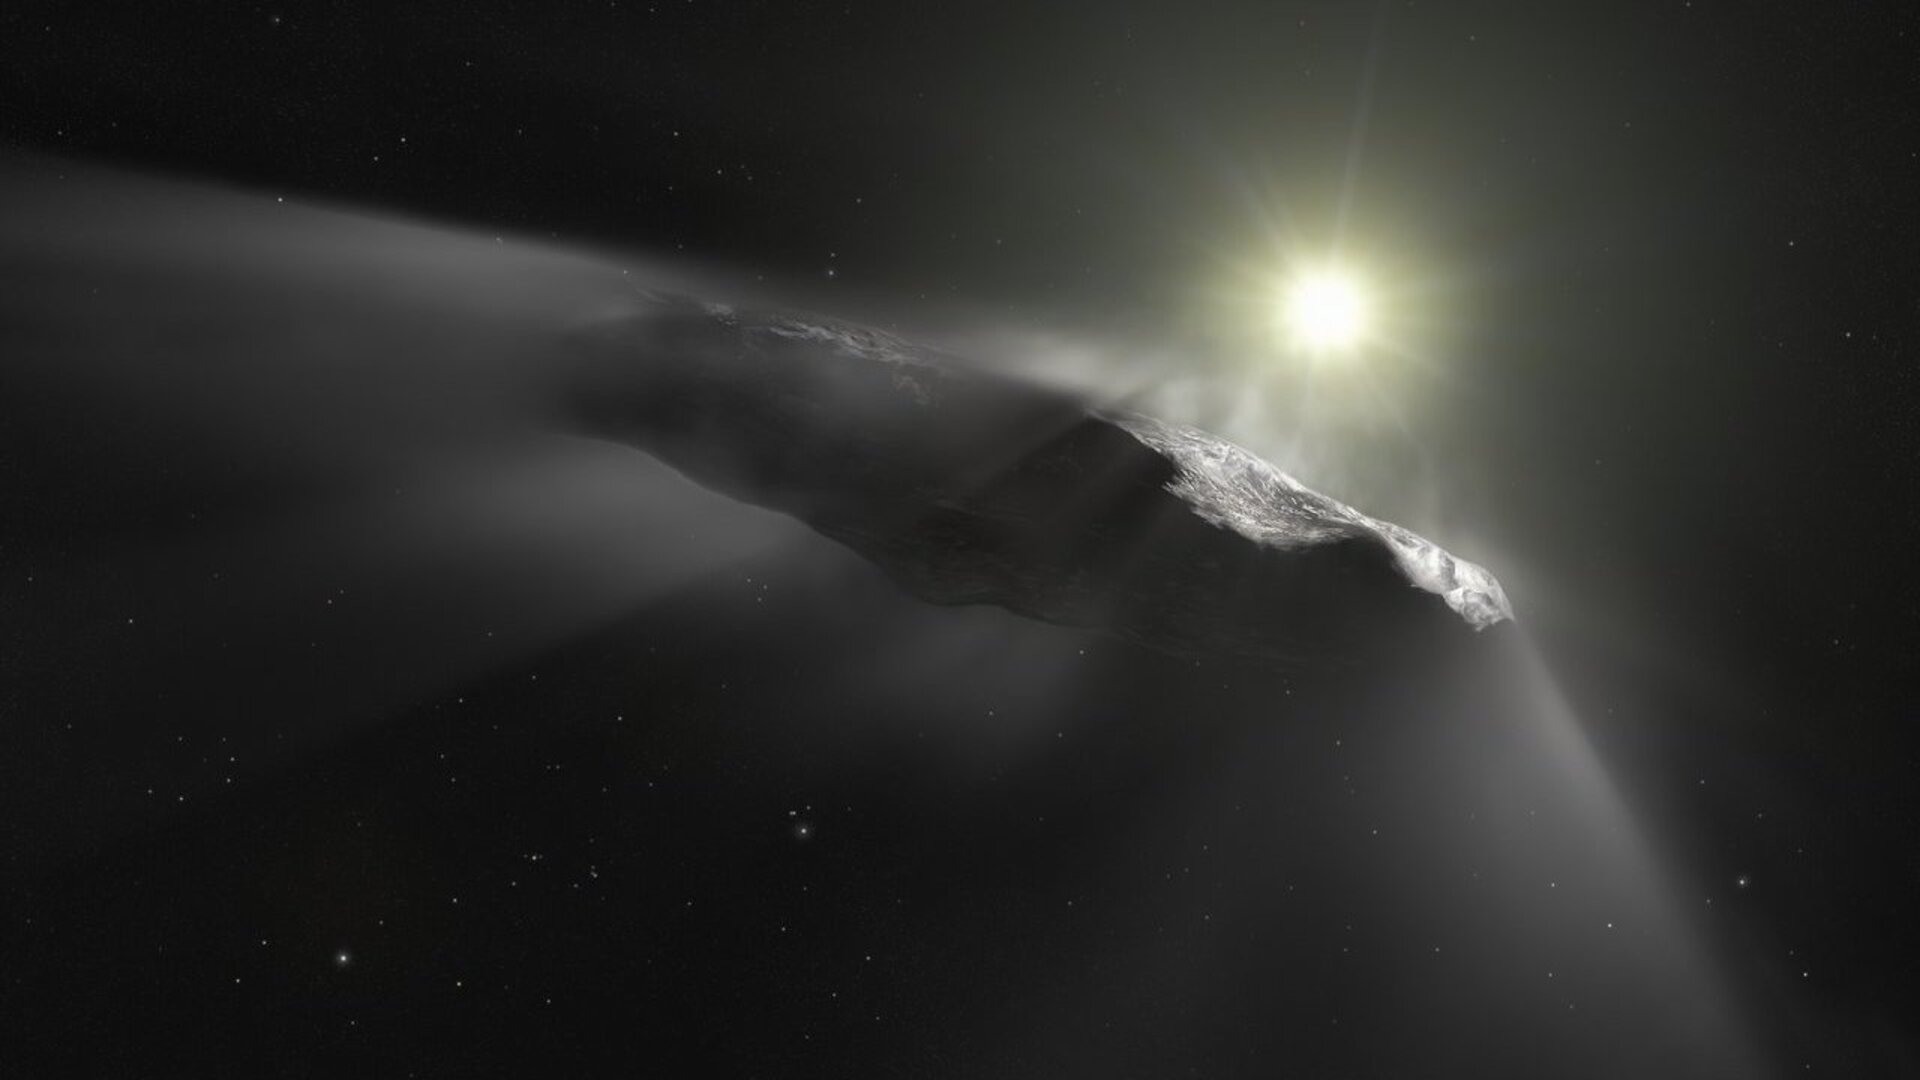 Artist impression of ‘Oumuamua